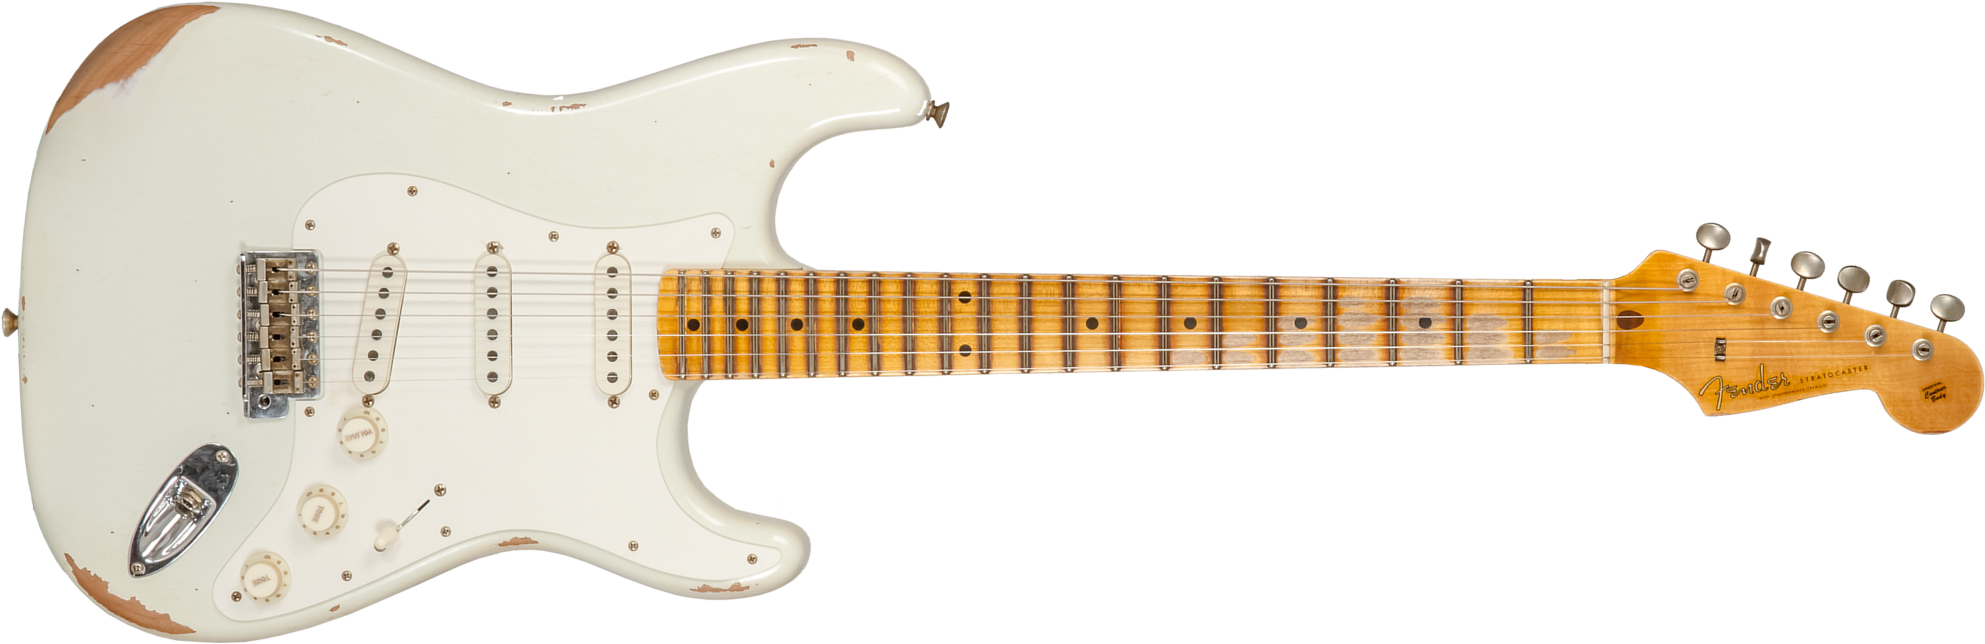 Fender Custom Shop Strat Fat 50's 3s Trem Mn #cz570495 - Relic India Ivory - Elektrische gitaar in Str-vorm - Main picture